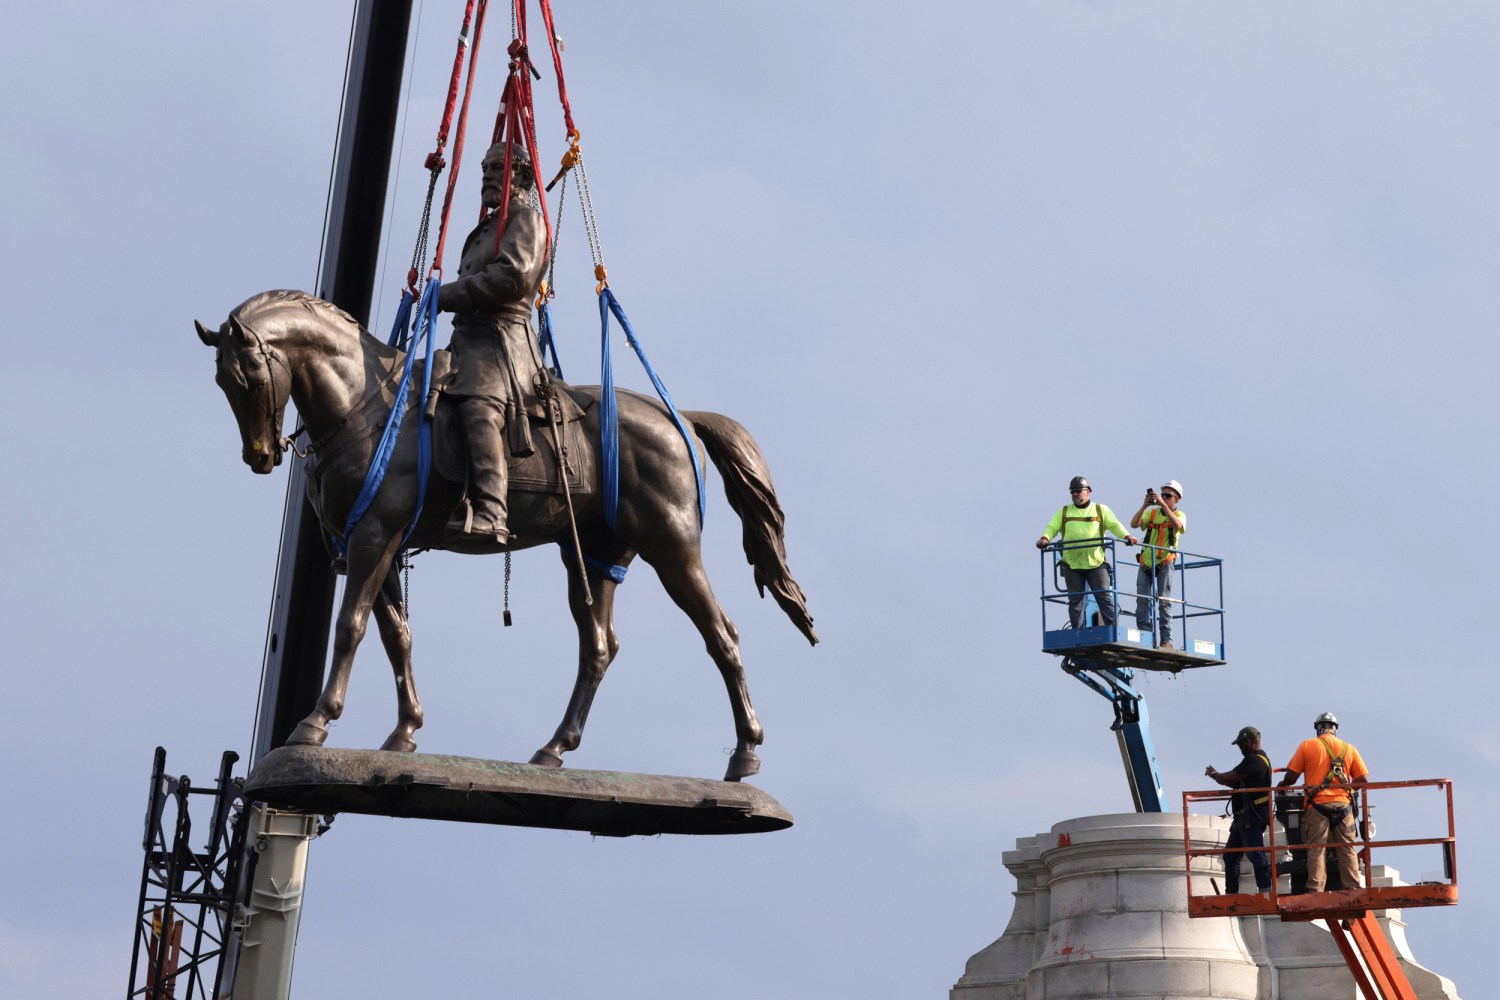 Robert E. Lee statue in Richmond, Virginia, taken down, cut into pieces